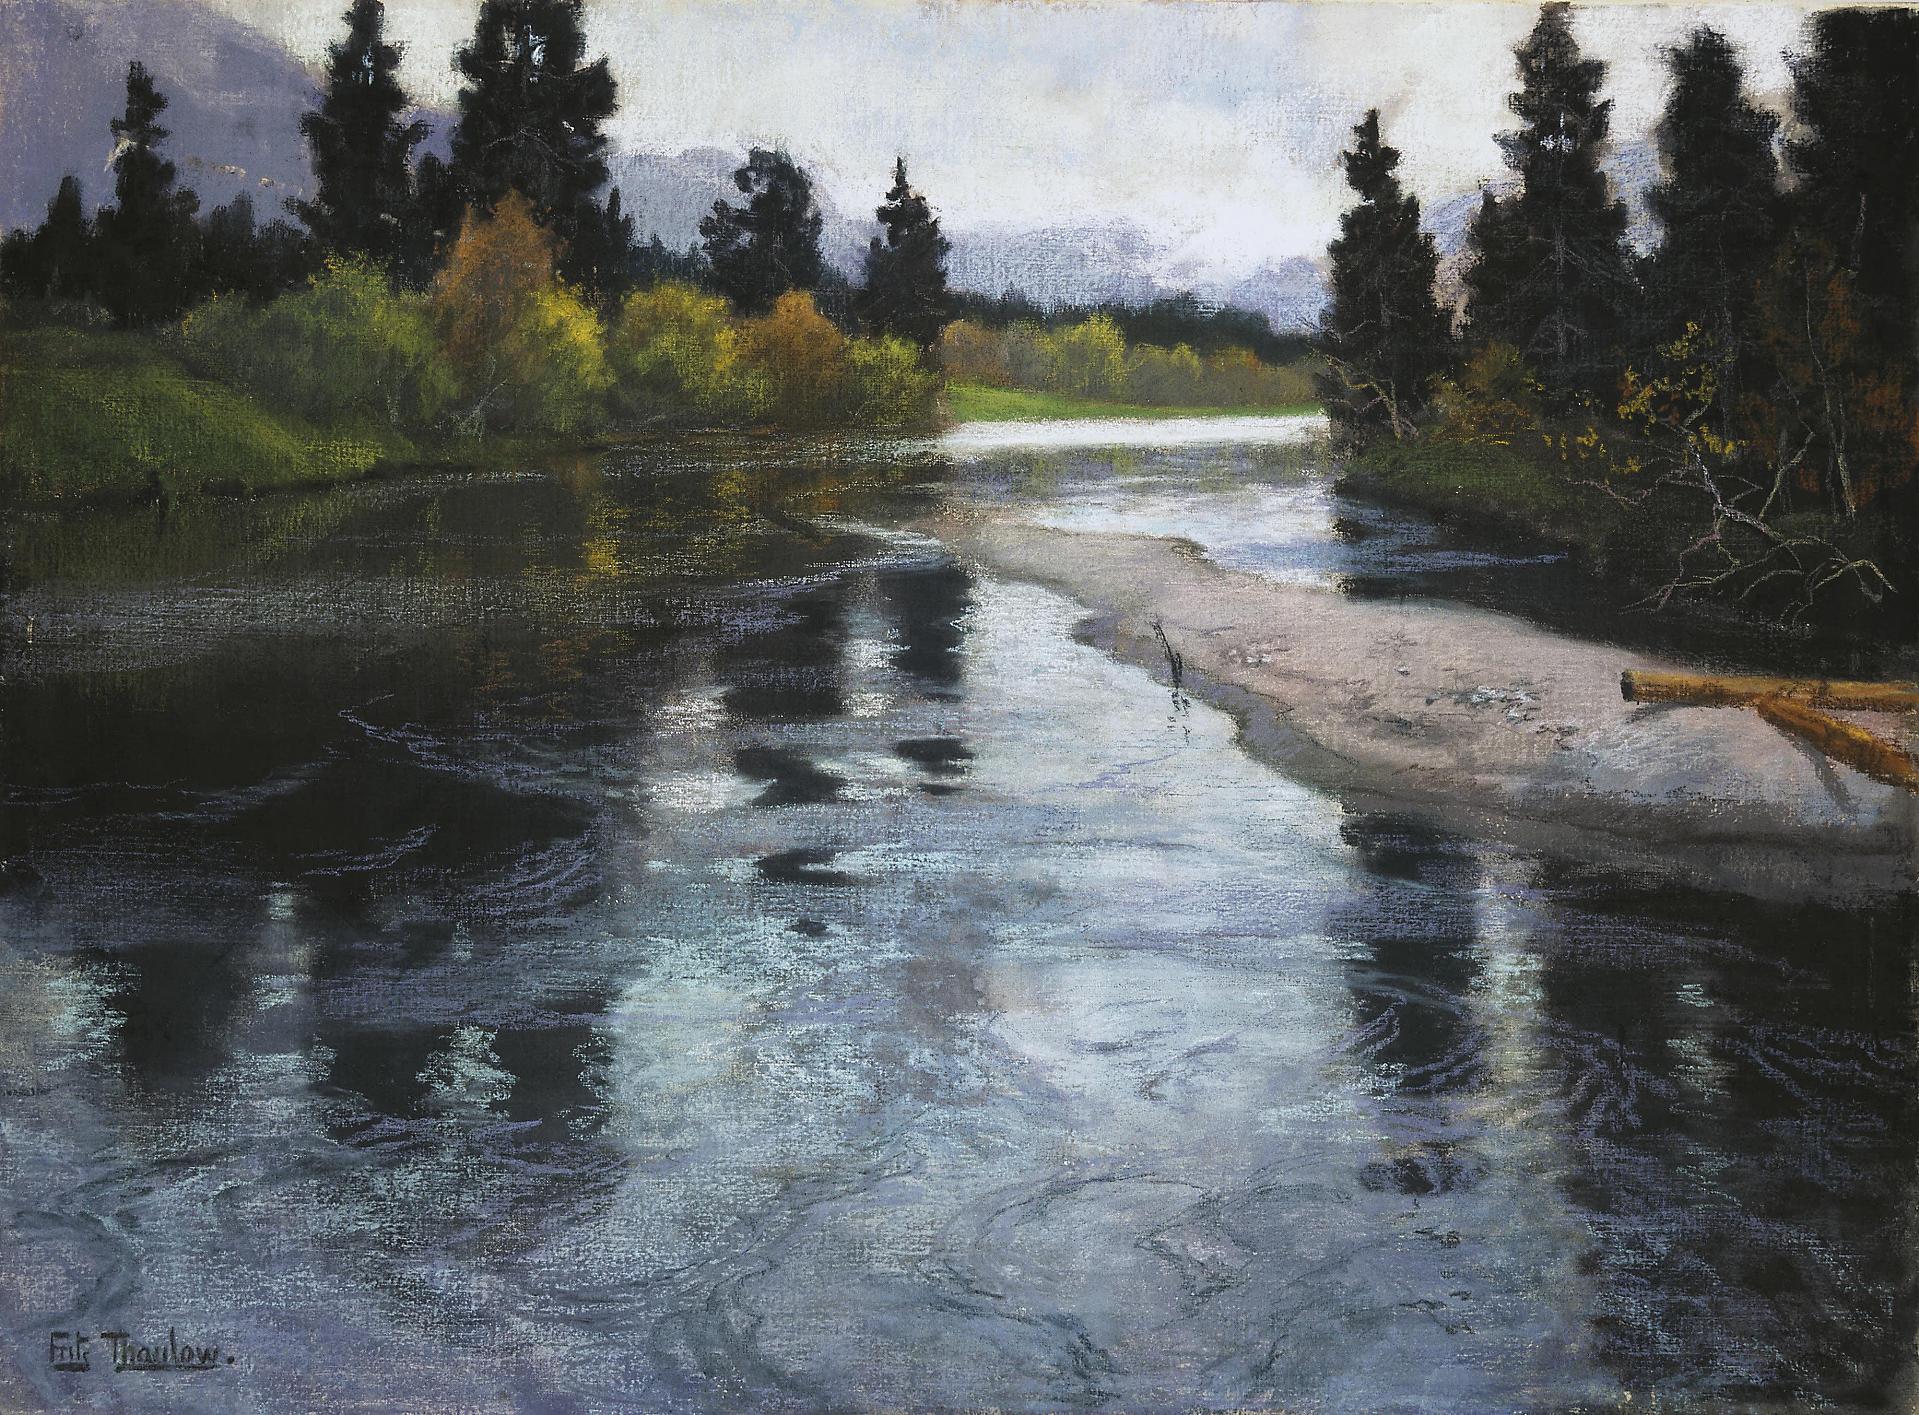 Франц Таулов (Иоганн Фредерик). "Река". Около 1883? Эрмитаж, Санкт-Петербург.